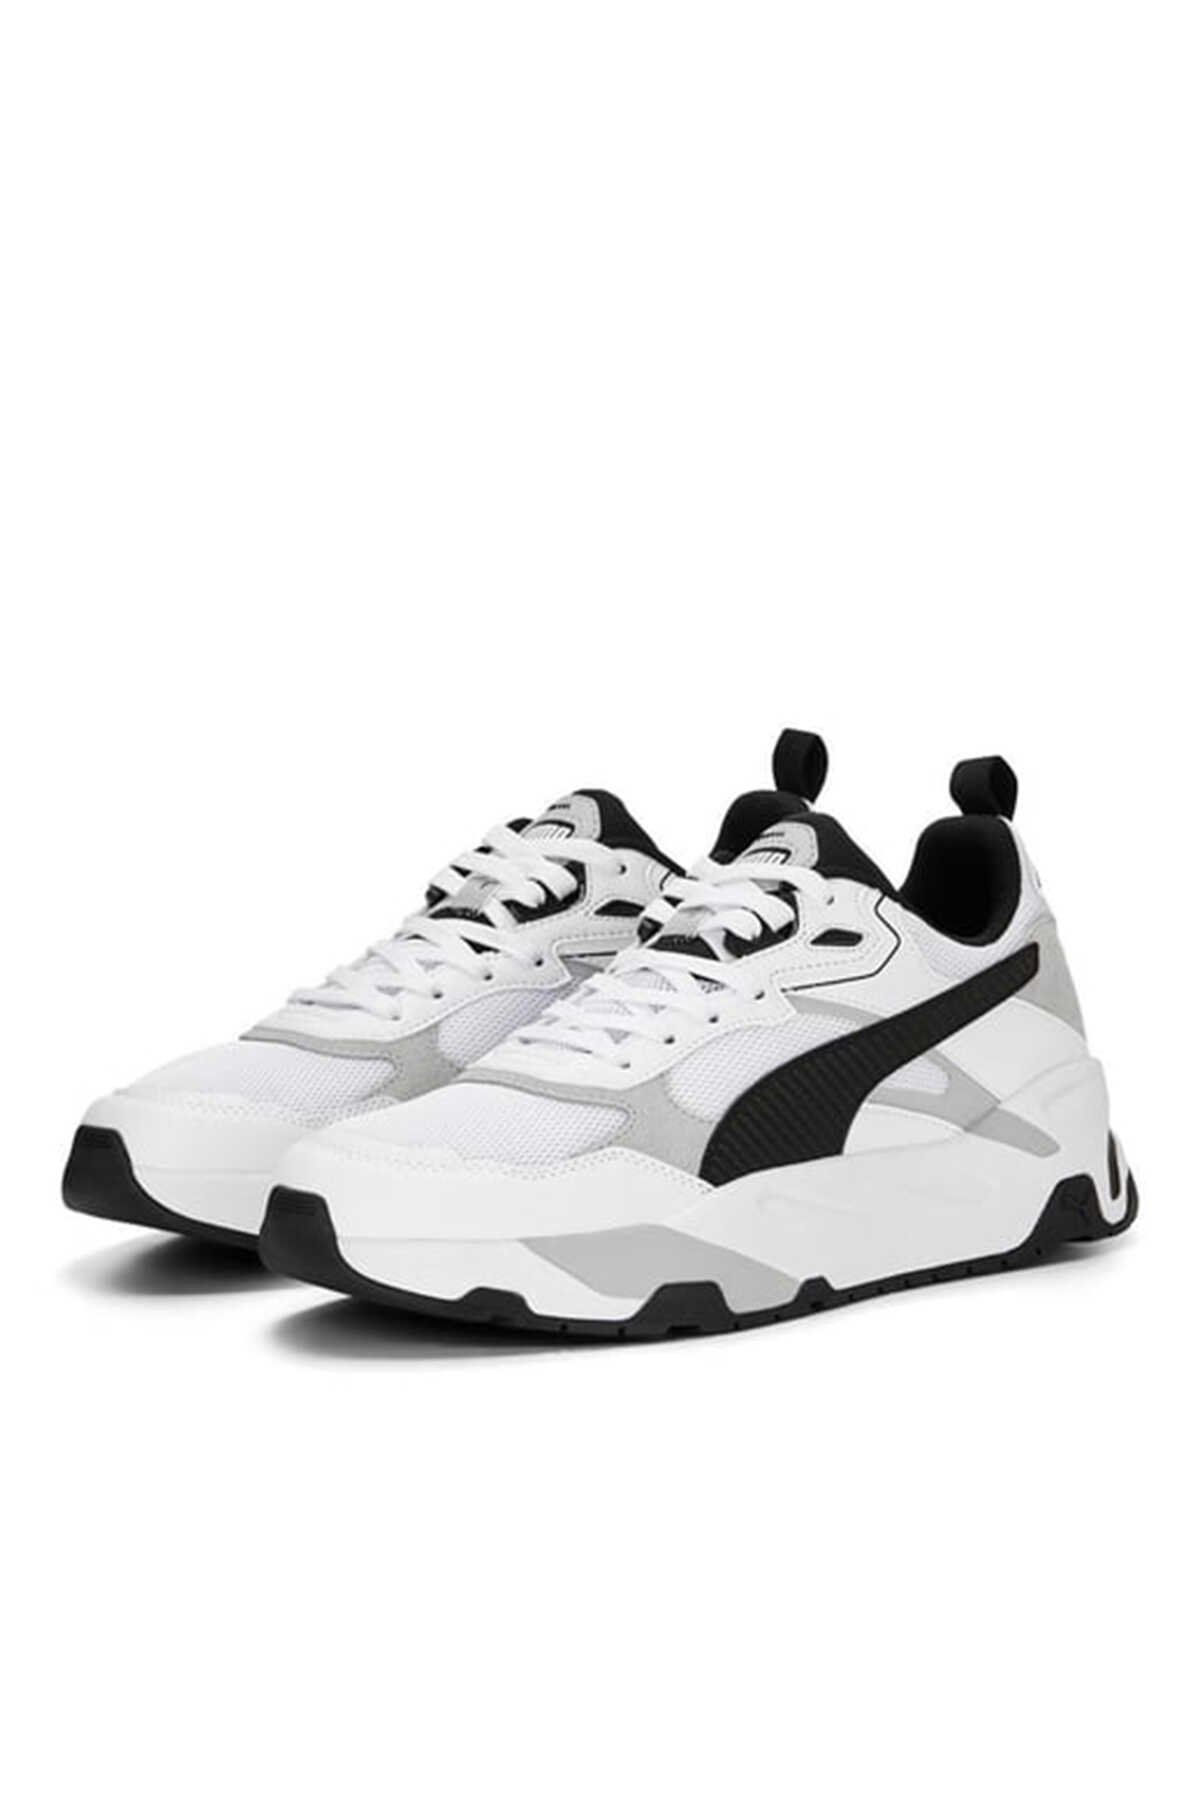 Puma - Puma Trinity Erkek Sneaker Ayakkabı Beyaz / Siyah